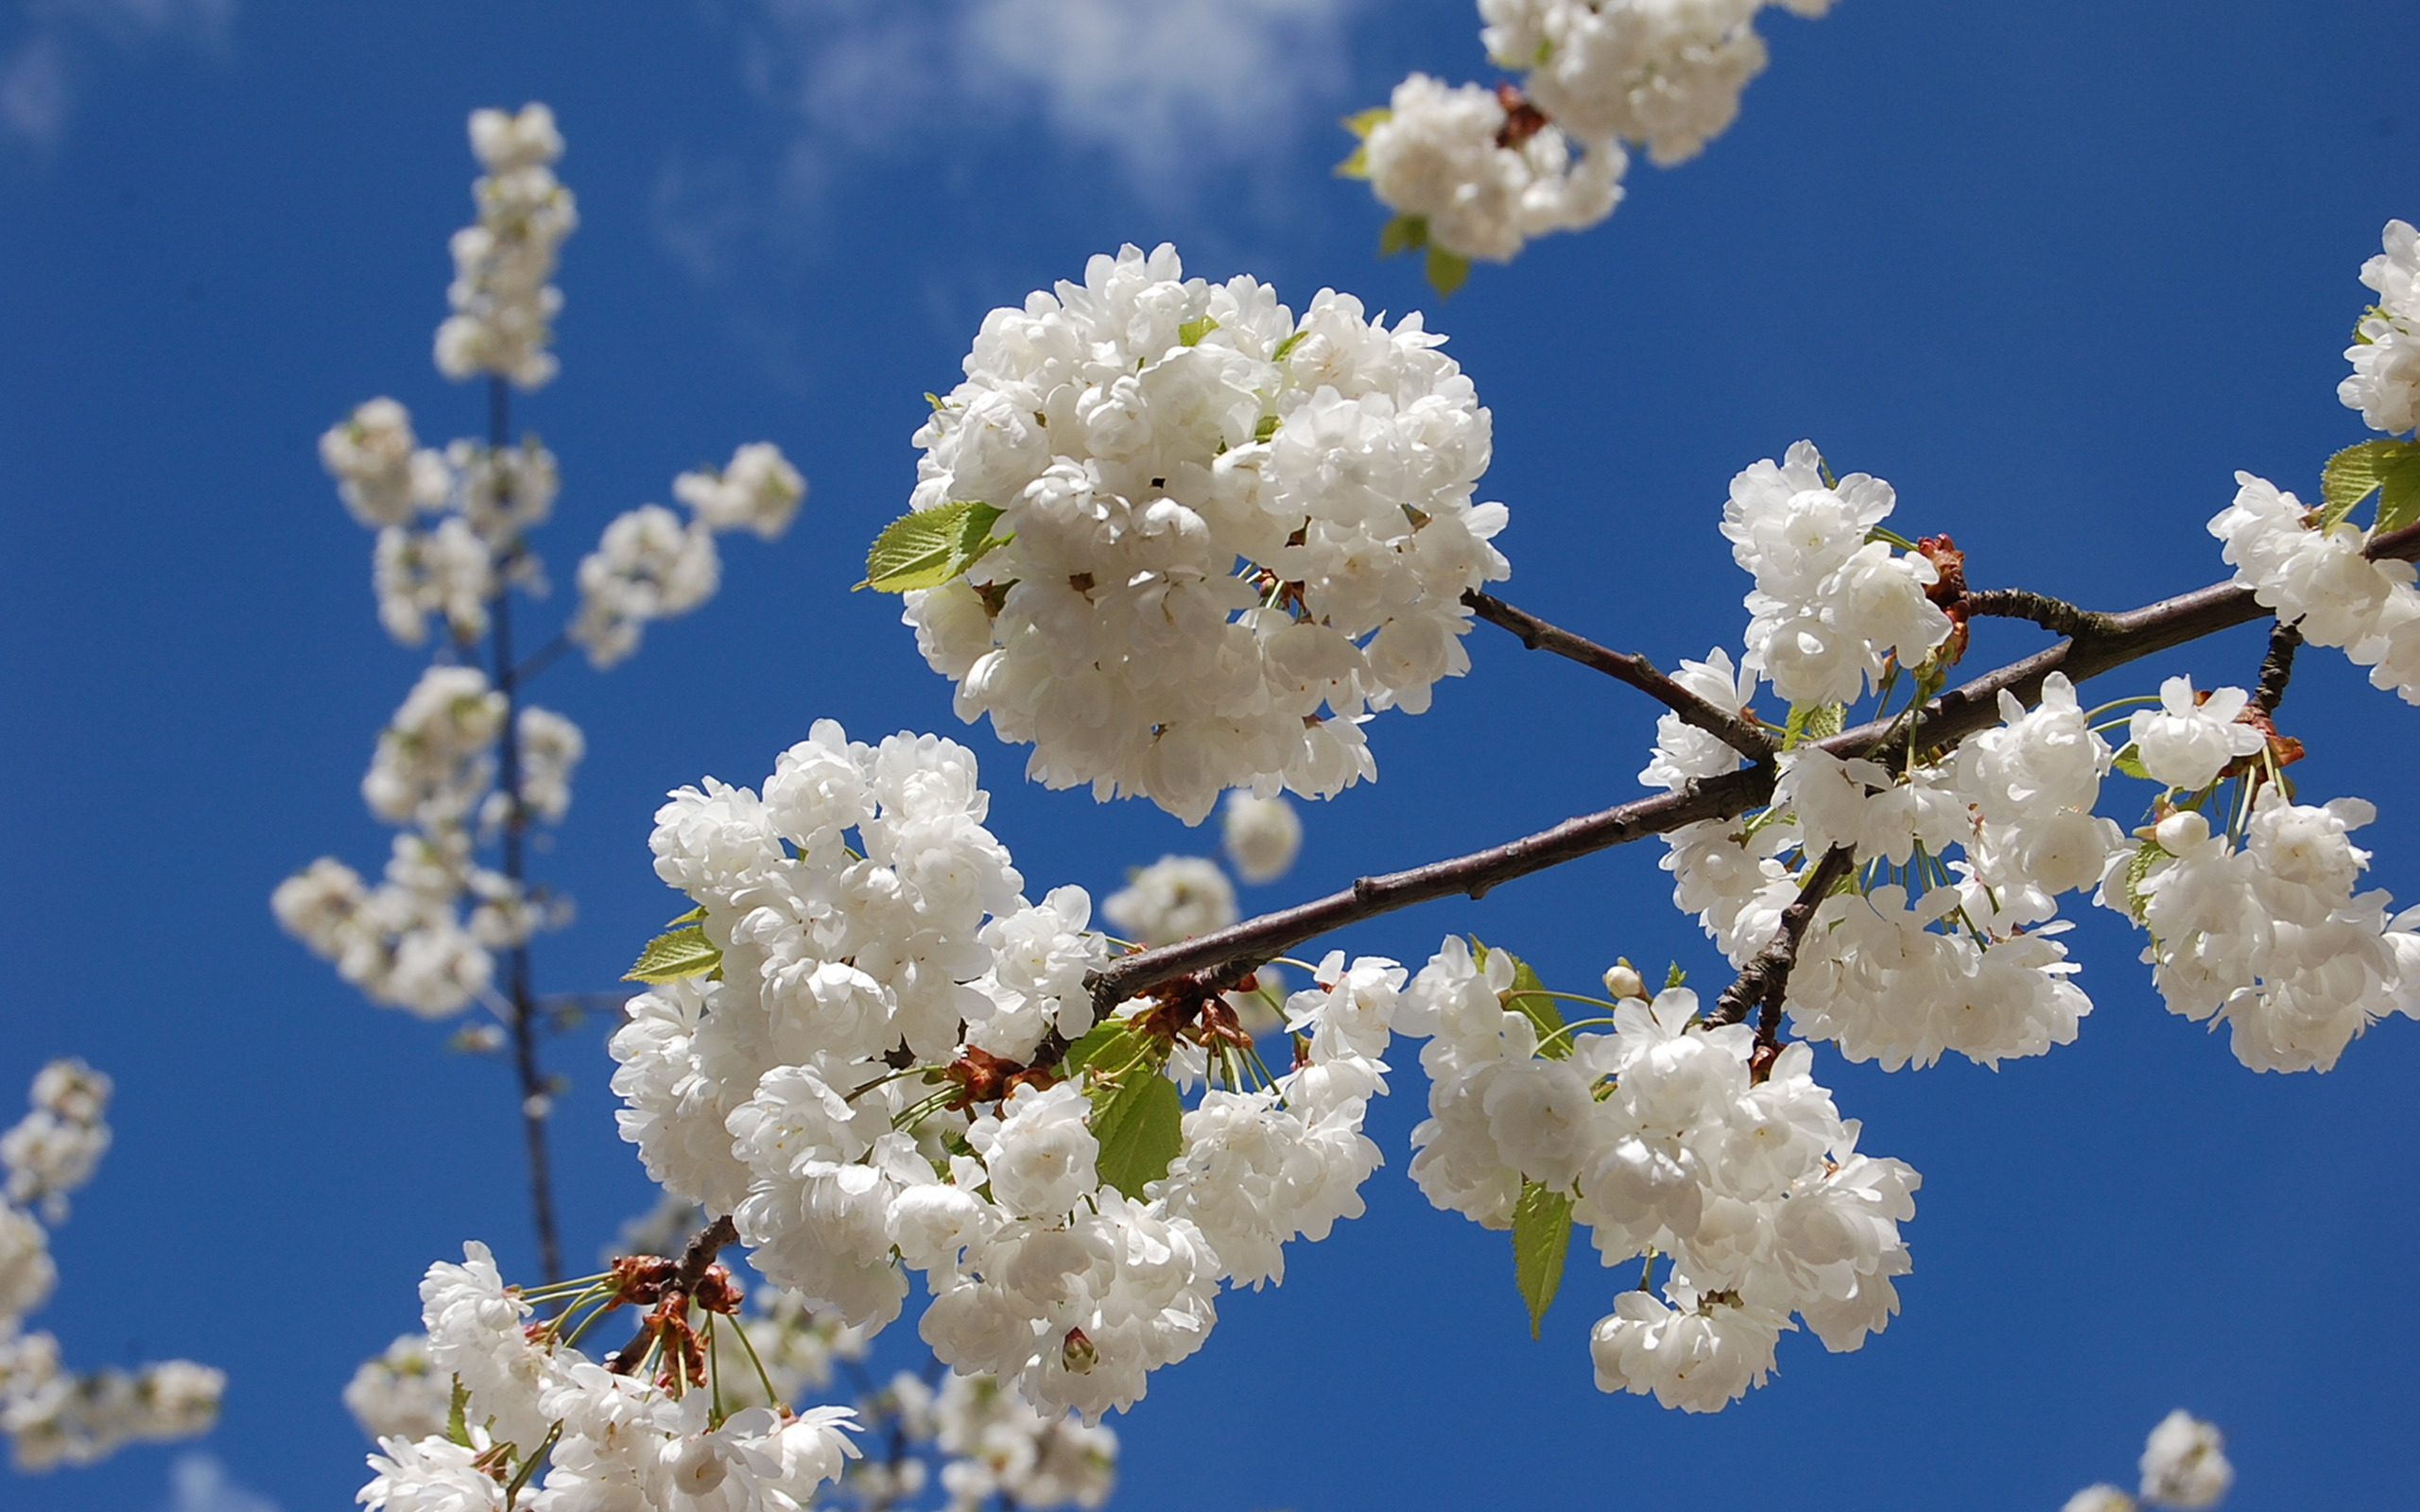 cherry blossoms, flowers, blossoms, white flowers - desktop wallpaper